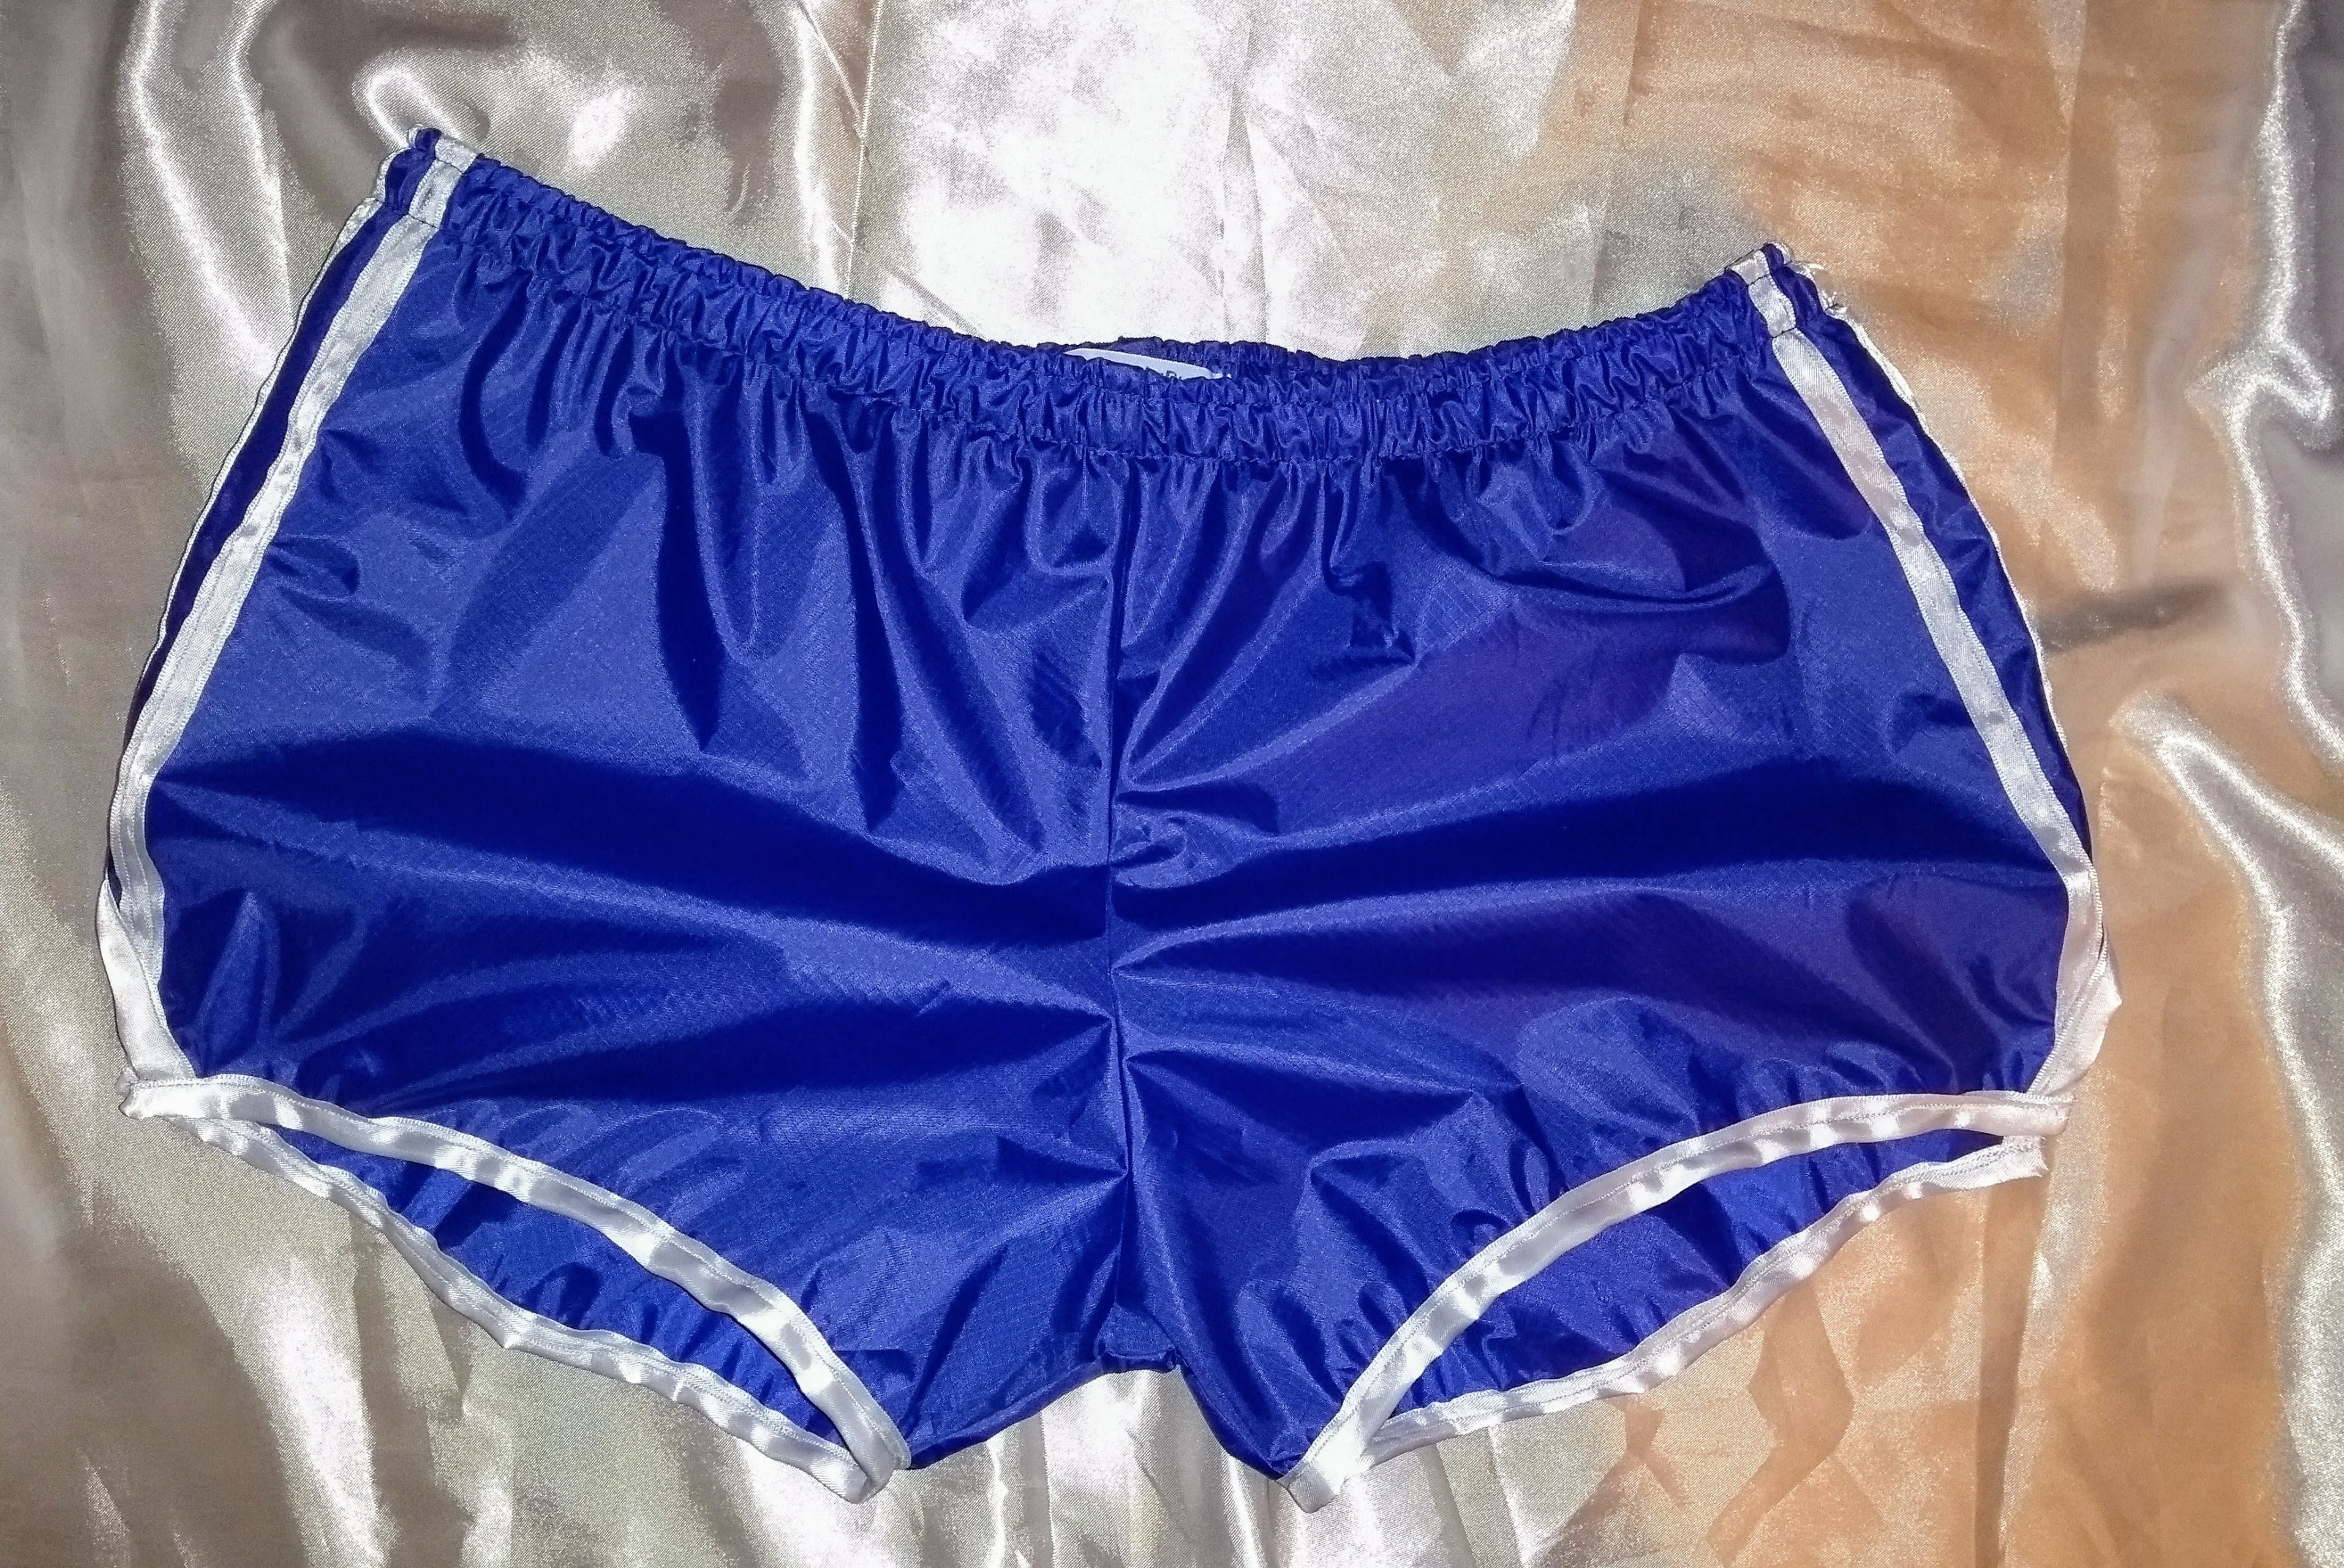 Royal blue ripstop nylon footy shorts with white trim (L)